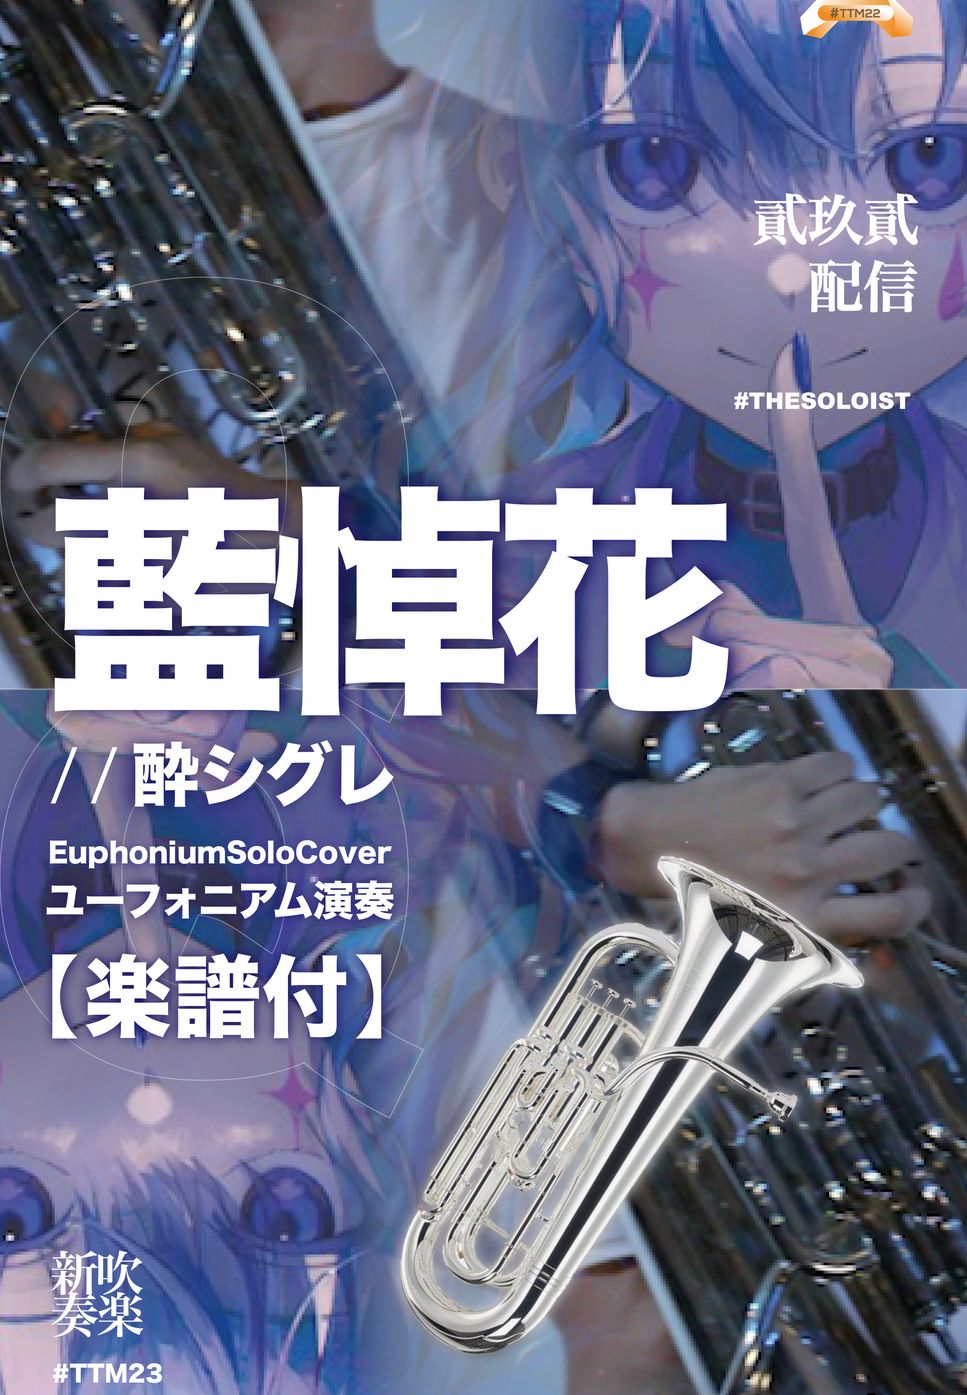 Yoishigure - aitouka (C/ Bb/ F/ Eb Solo Sheet Music) by QQ